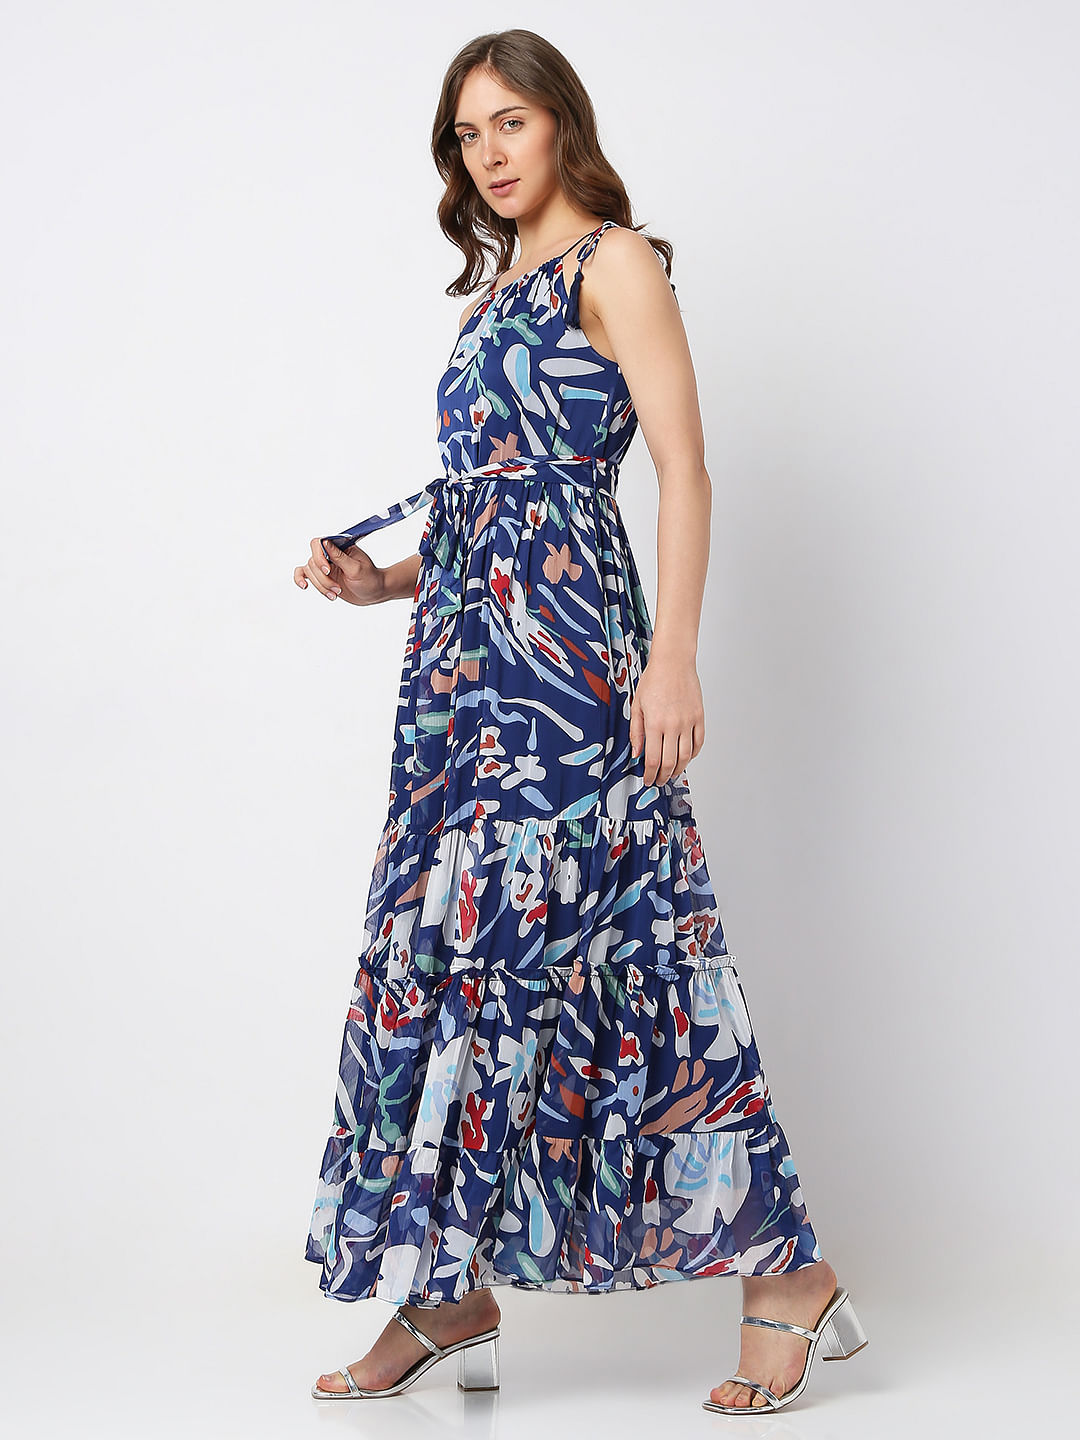 Buy Blue Floral Print Maxi dress Online - Label Ritu Kumar India Store View